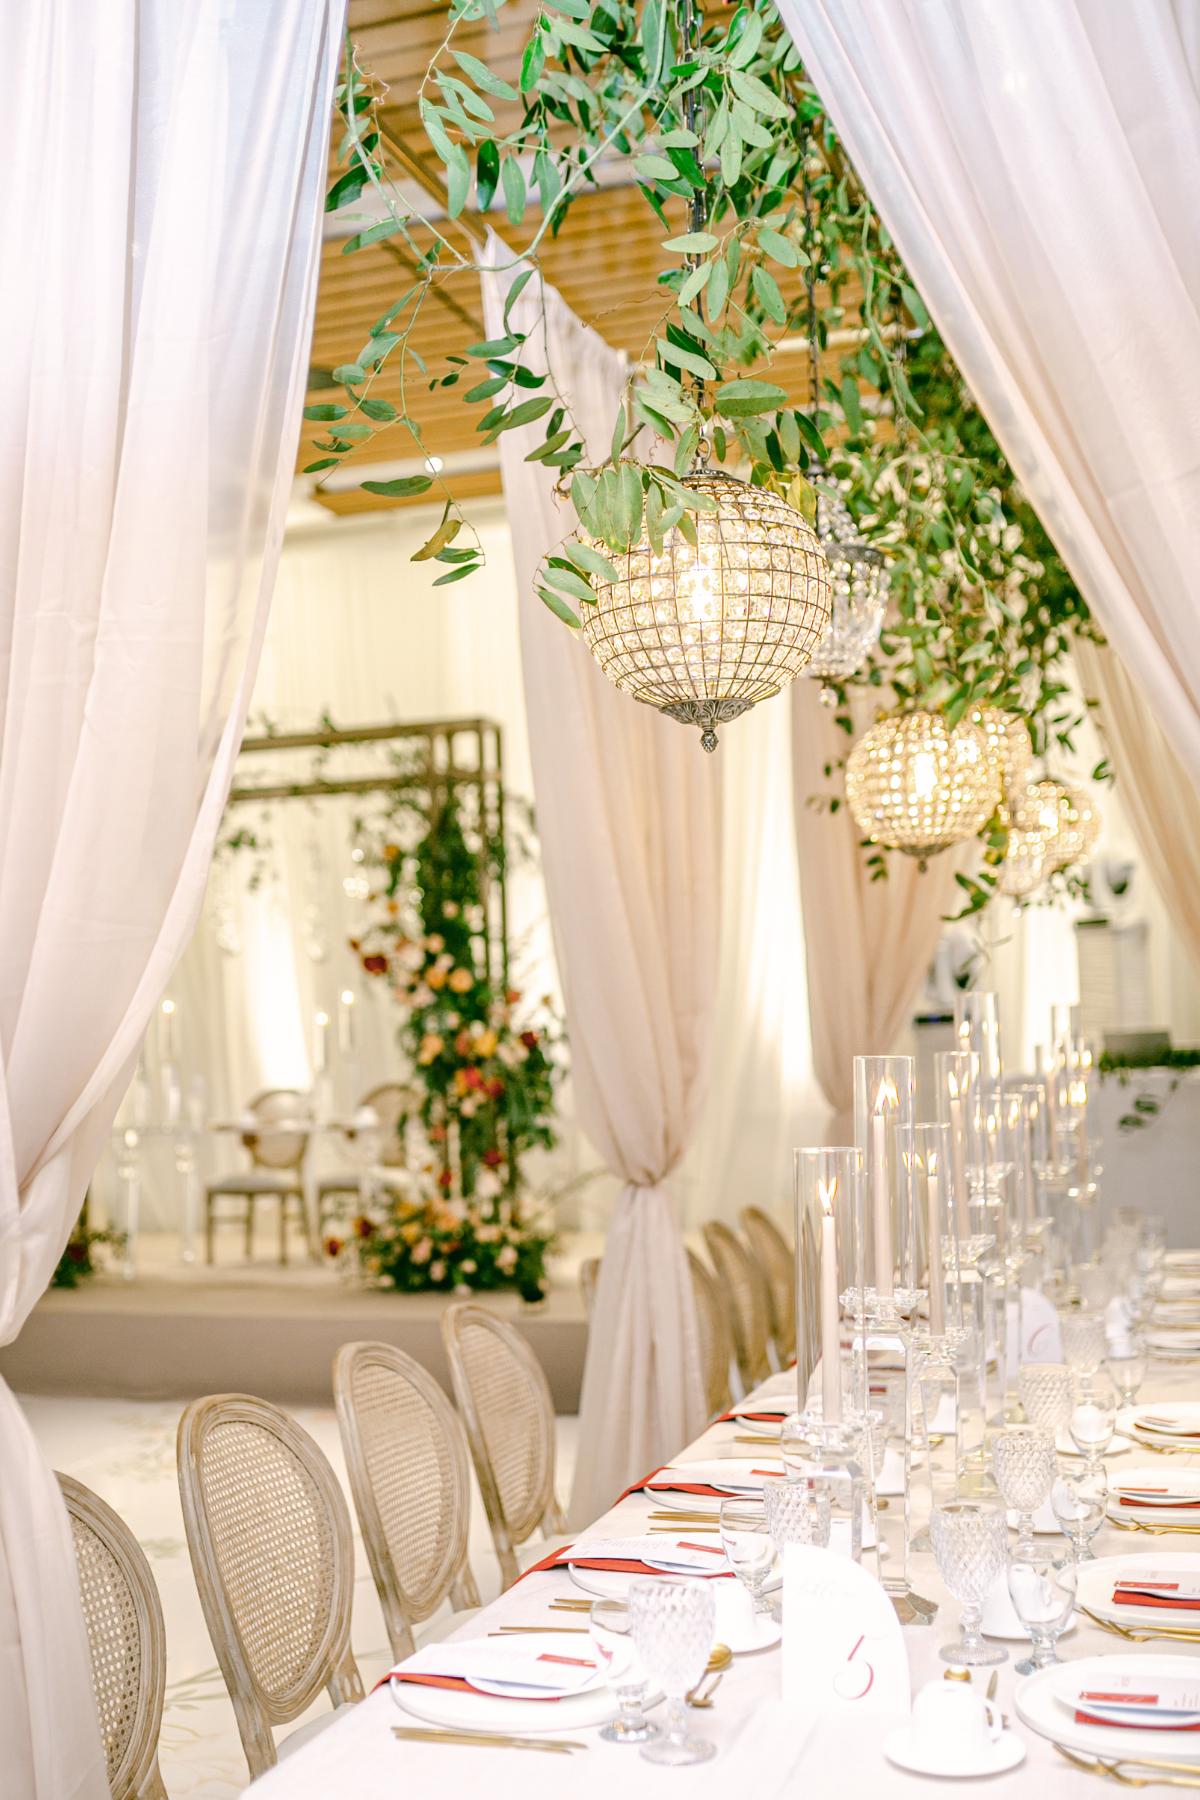 kavita-mohan-ivory-gold-orange-greenery-wedding-reception-sweetheart-table-draping-chandelier-cake